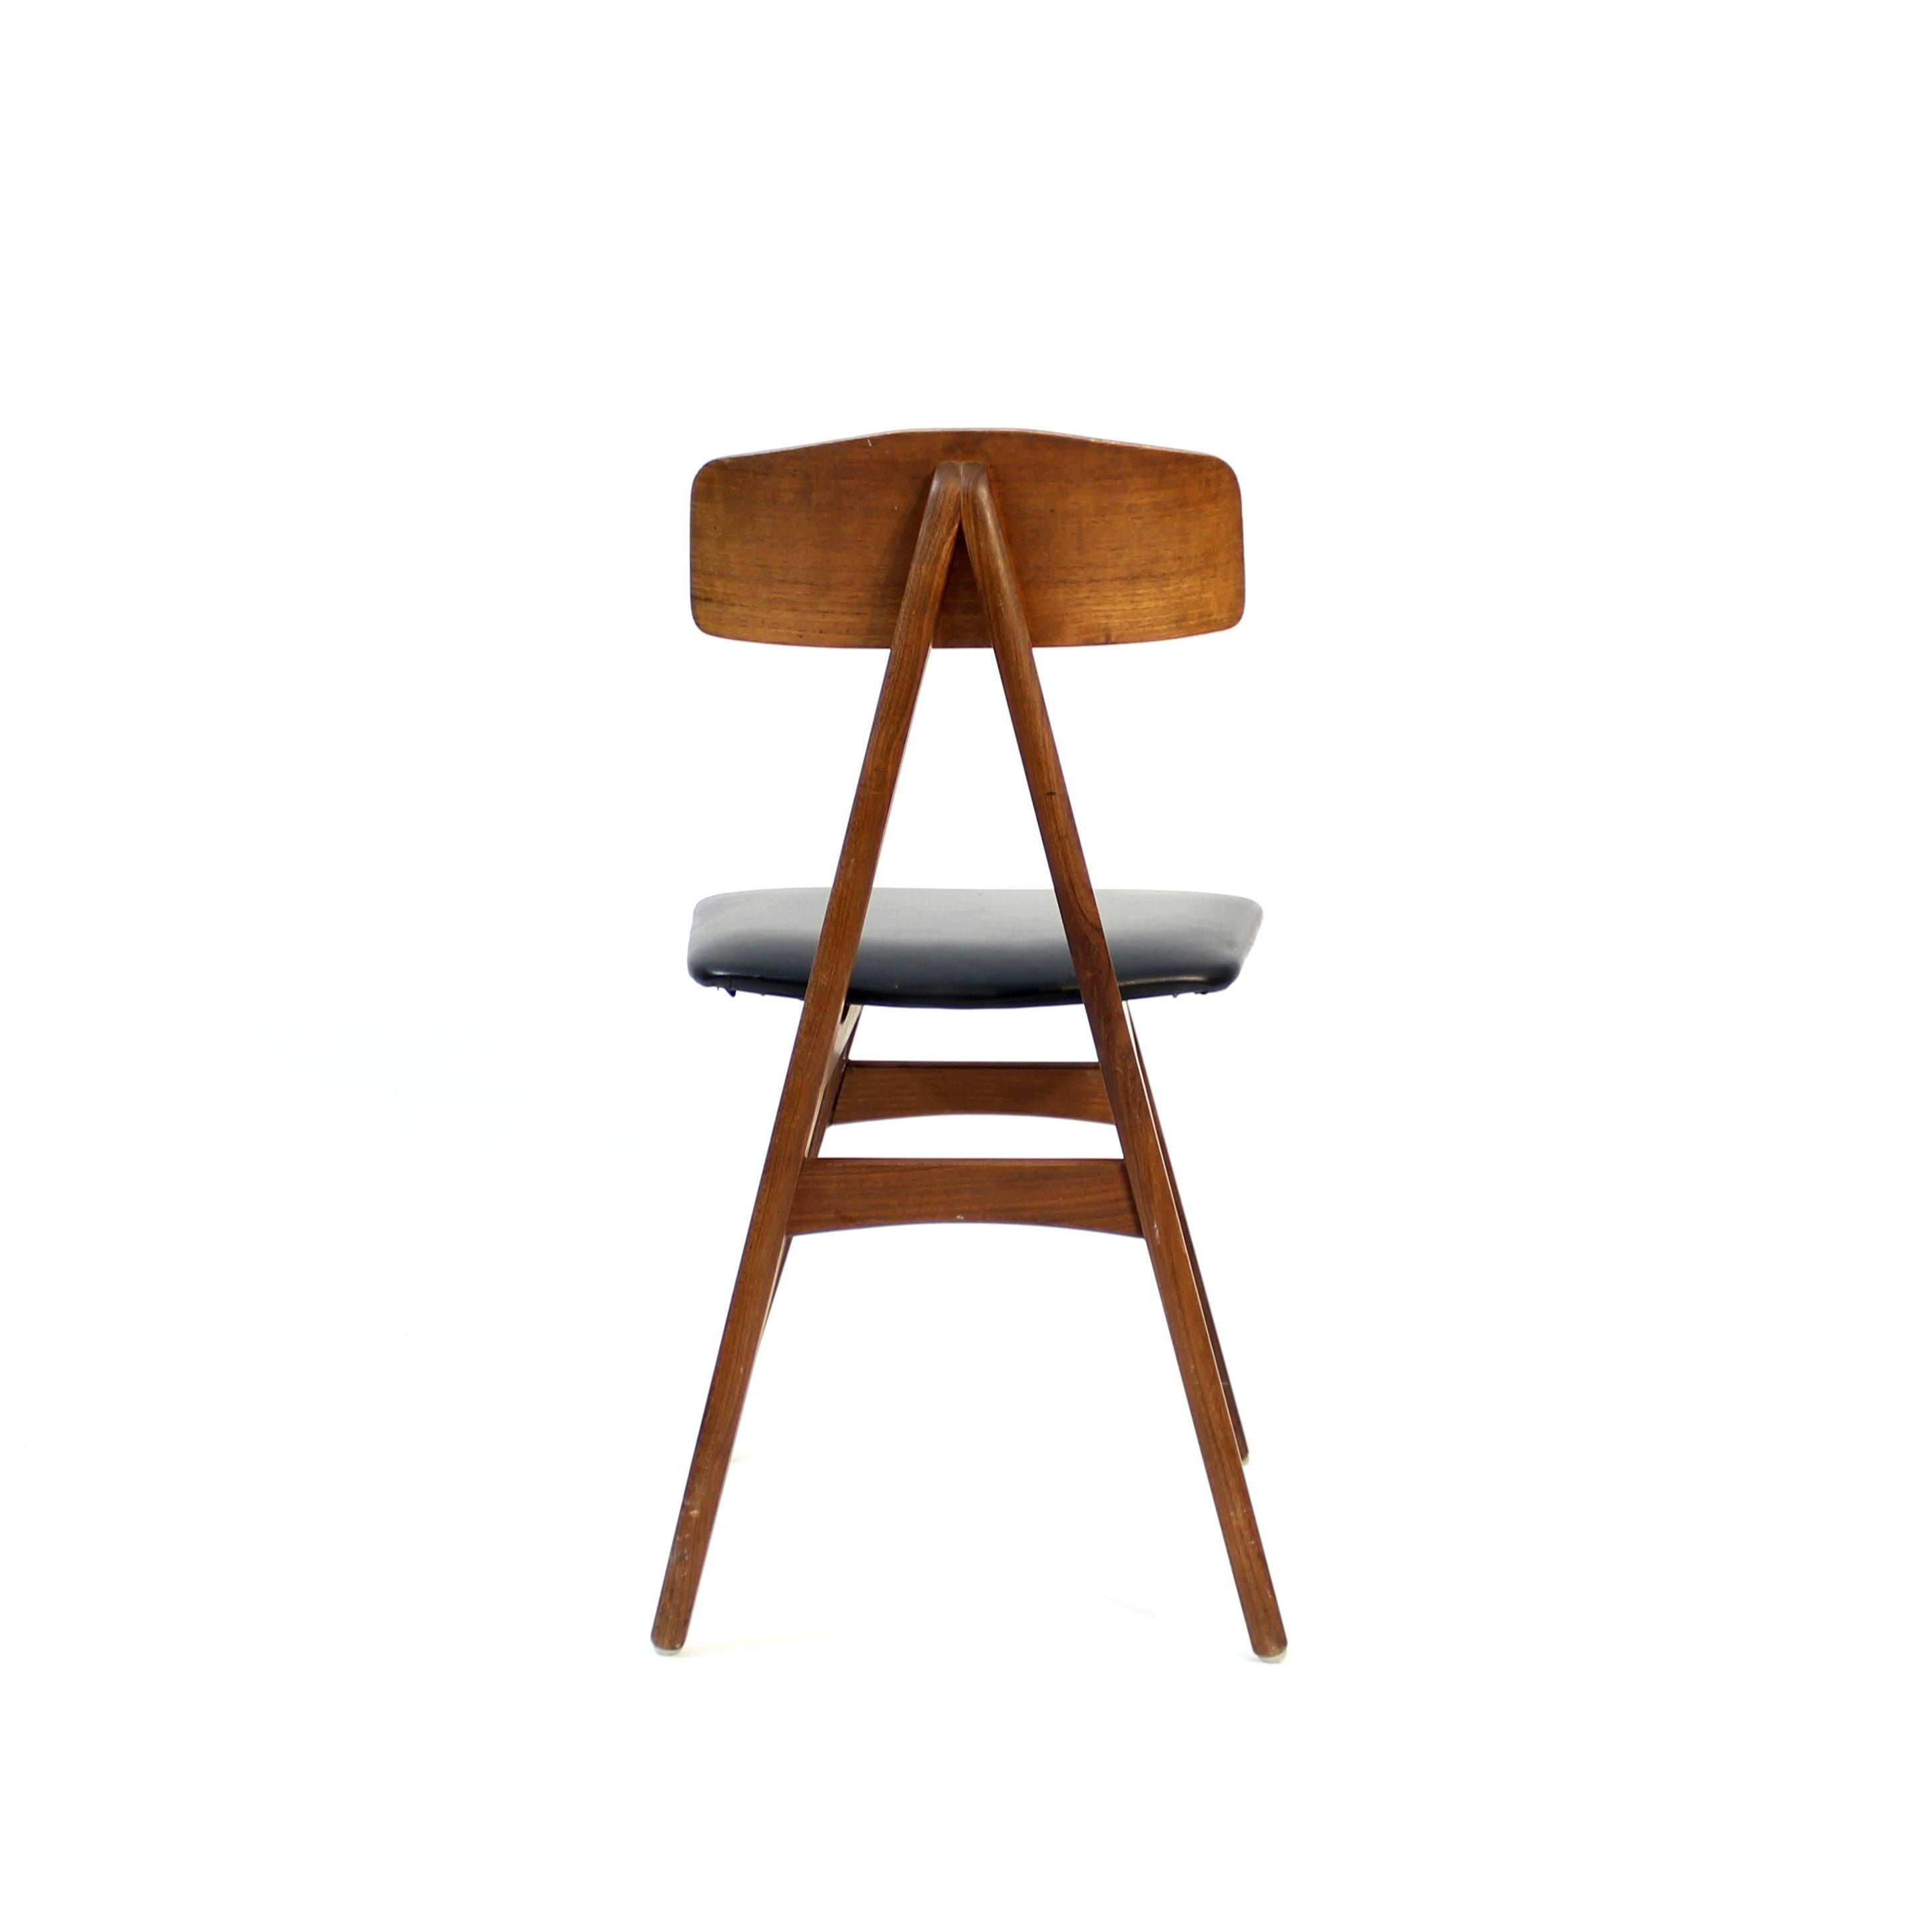 Bengt Ruda, Nizza teak chair for IKEA, 1959 For Sale 1